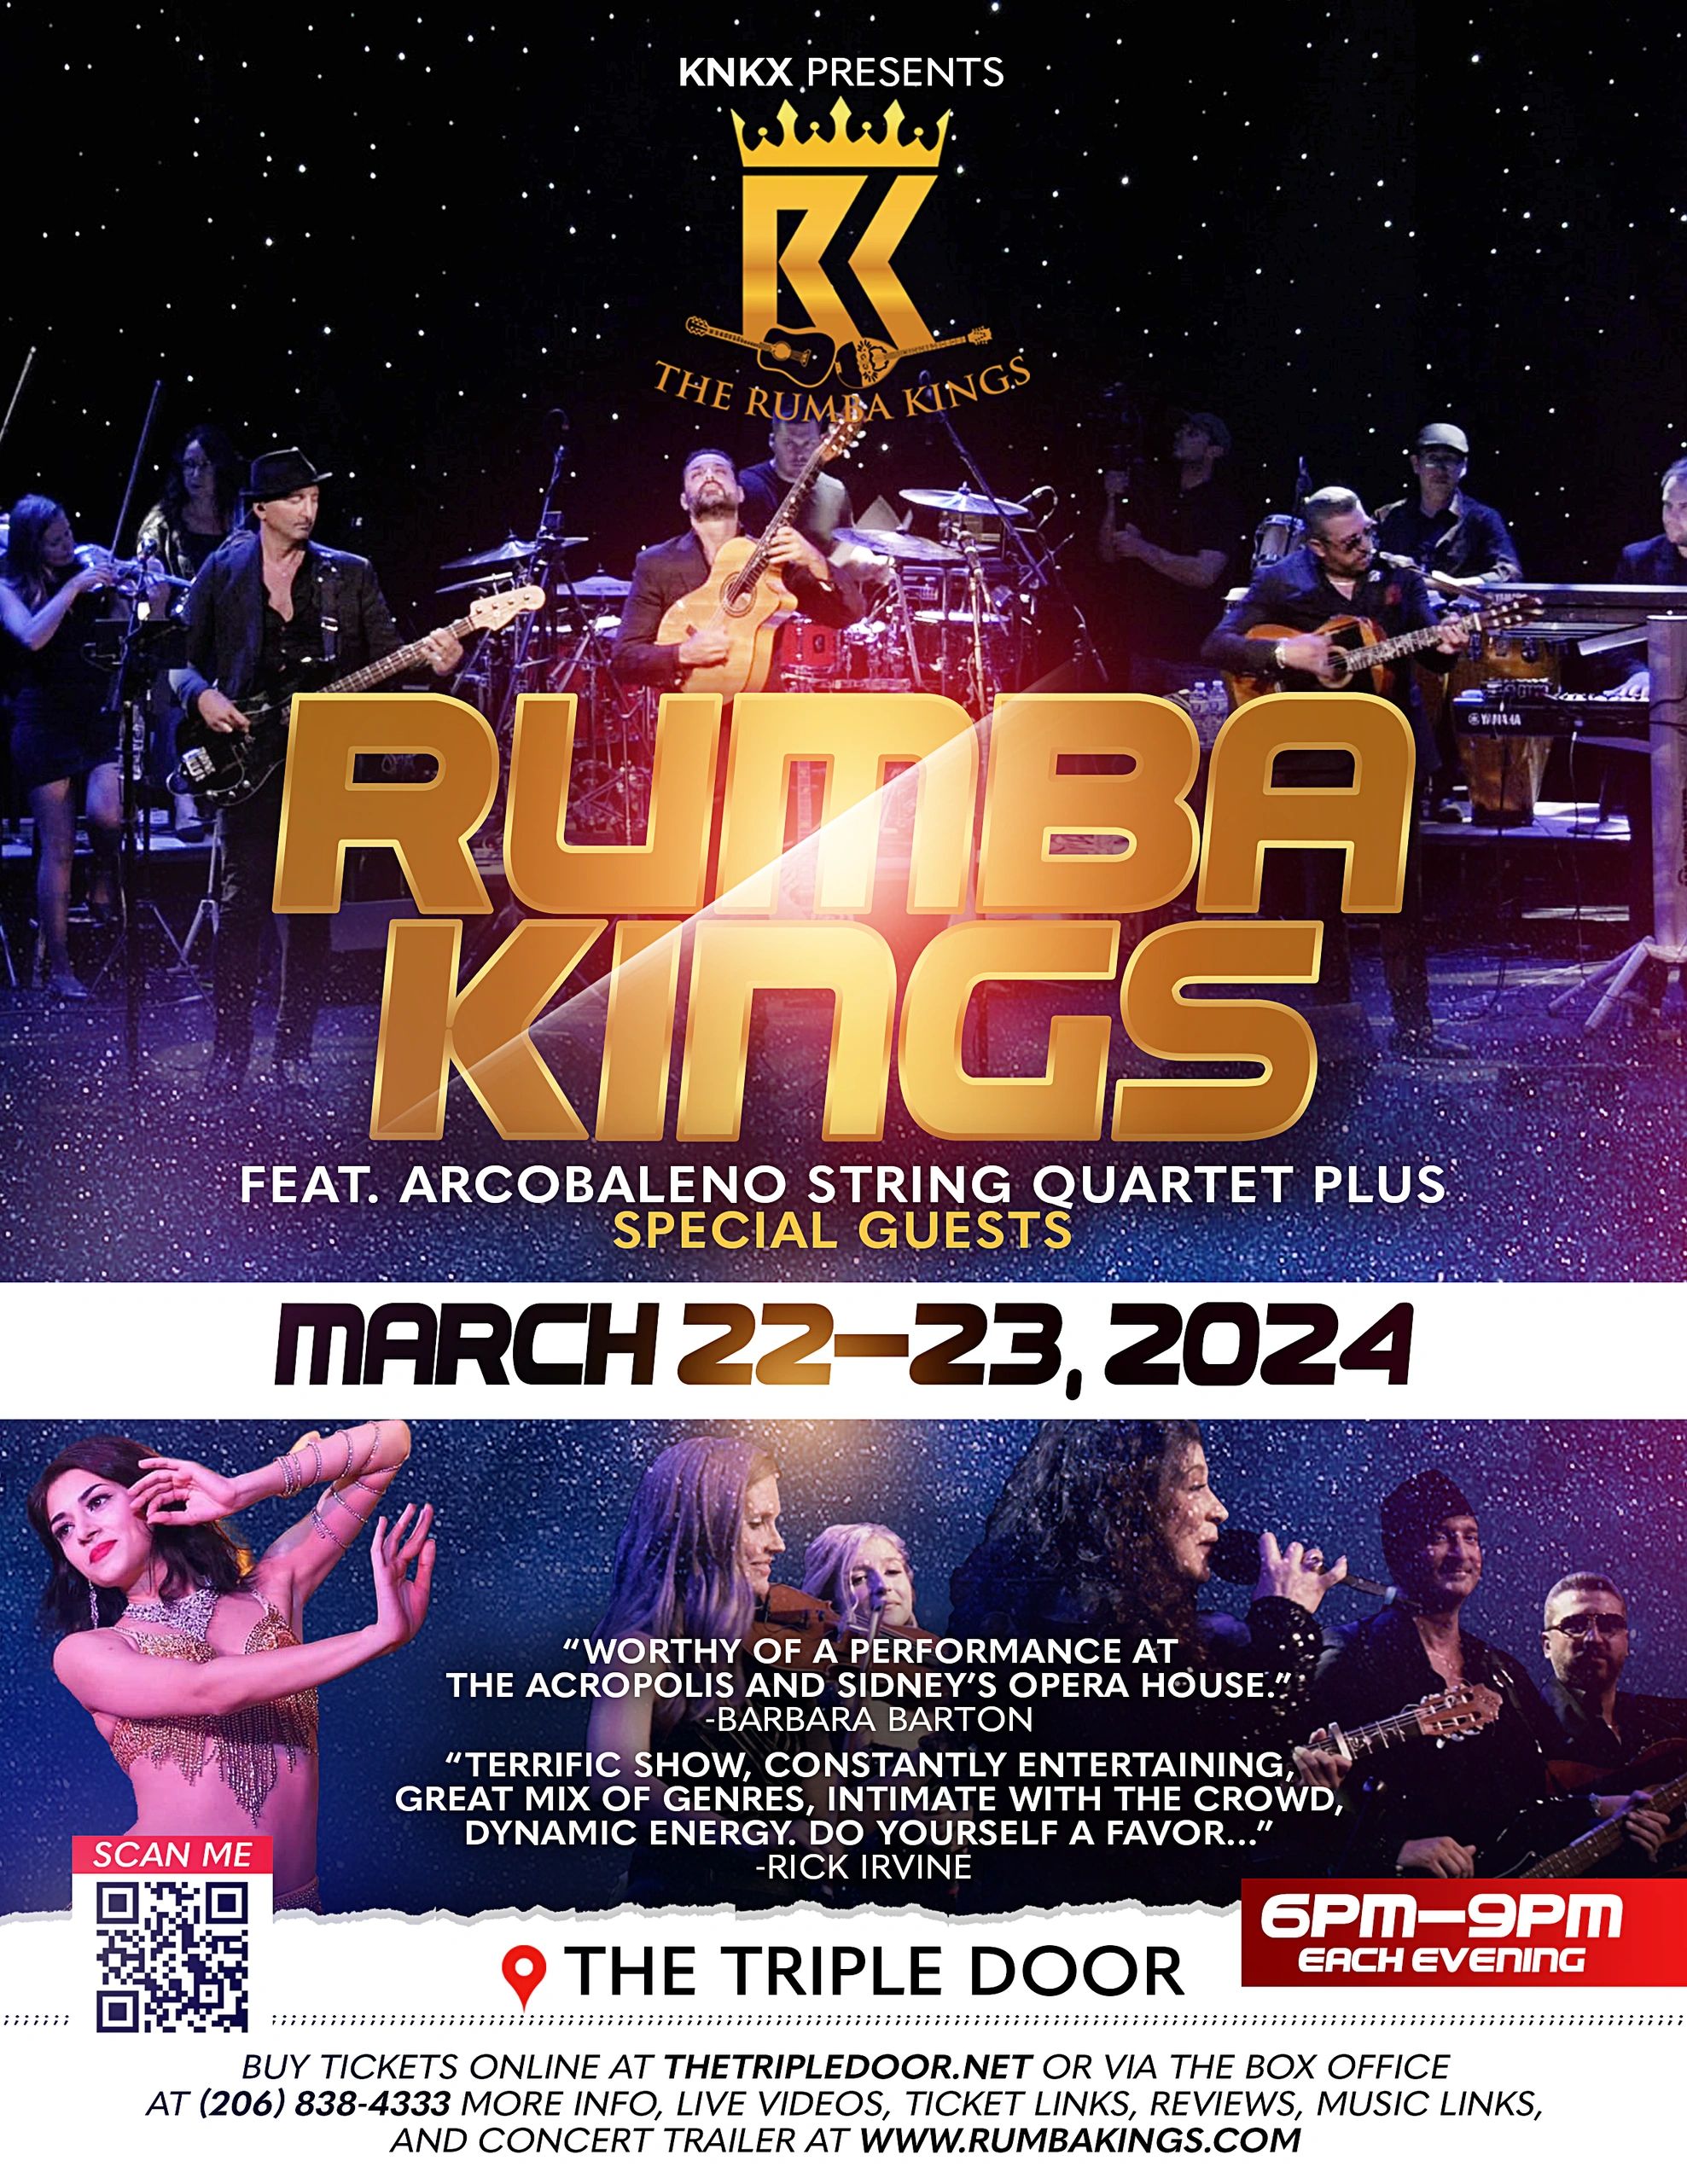 The Rumba Kings